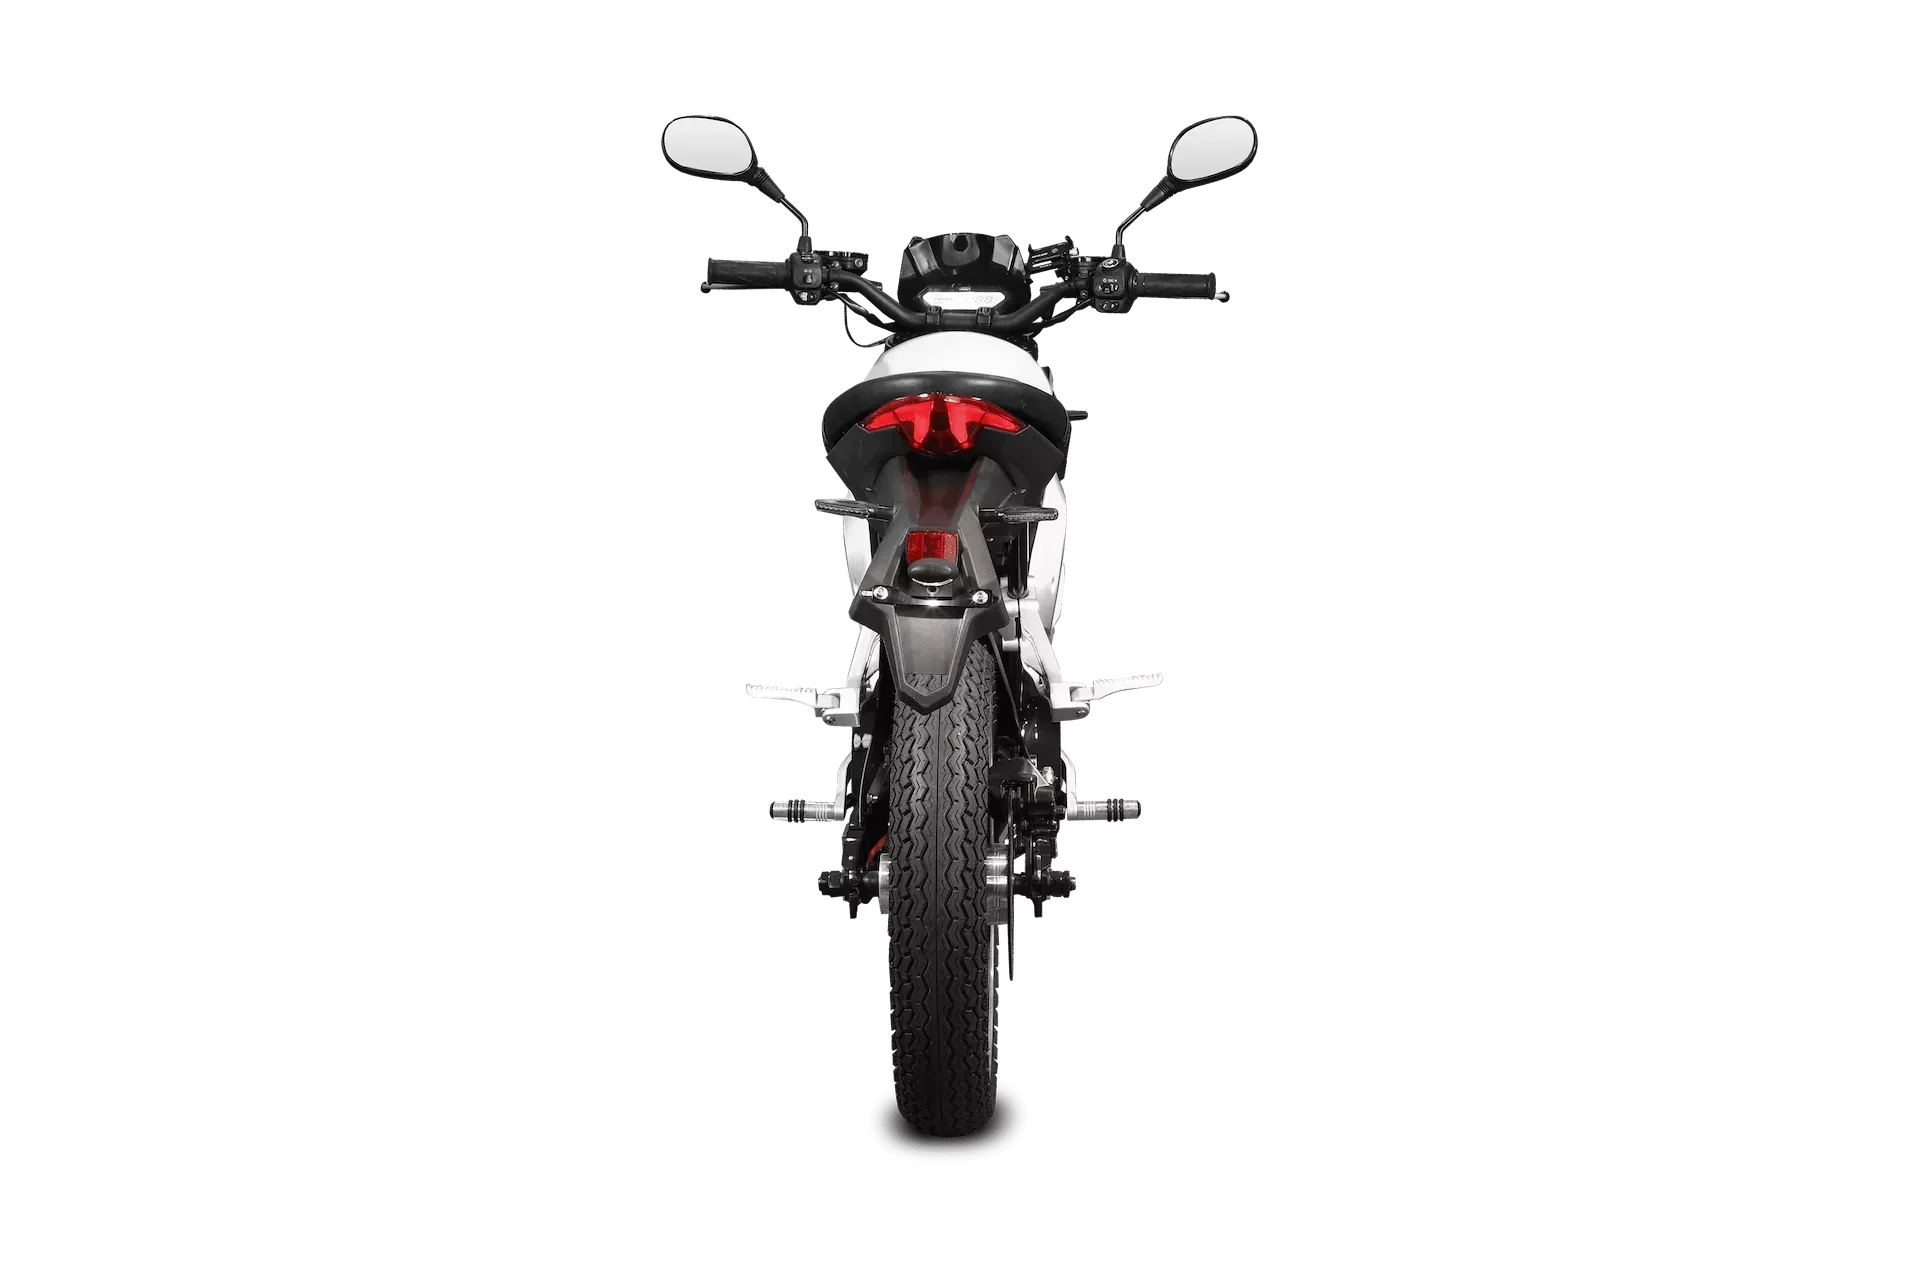 Urbet Gadiro E-125 - Excellent Motos par Urbet - Seulement €3500! Acheter maintenant sur Nexyo.fr